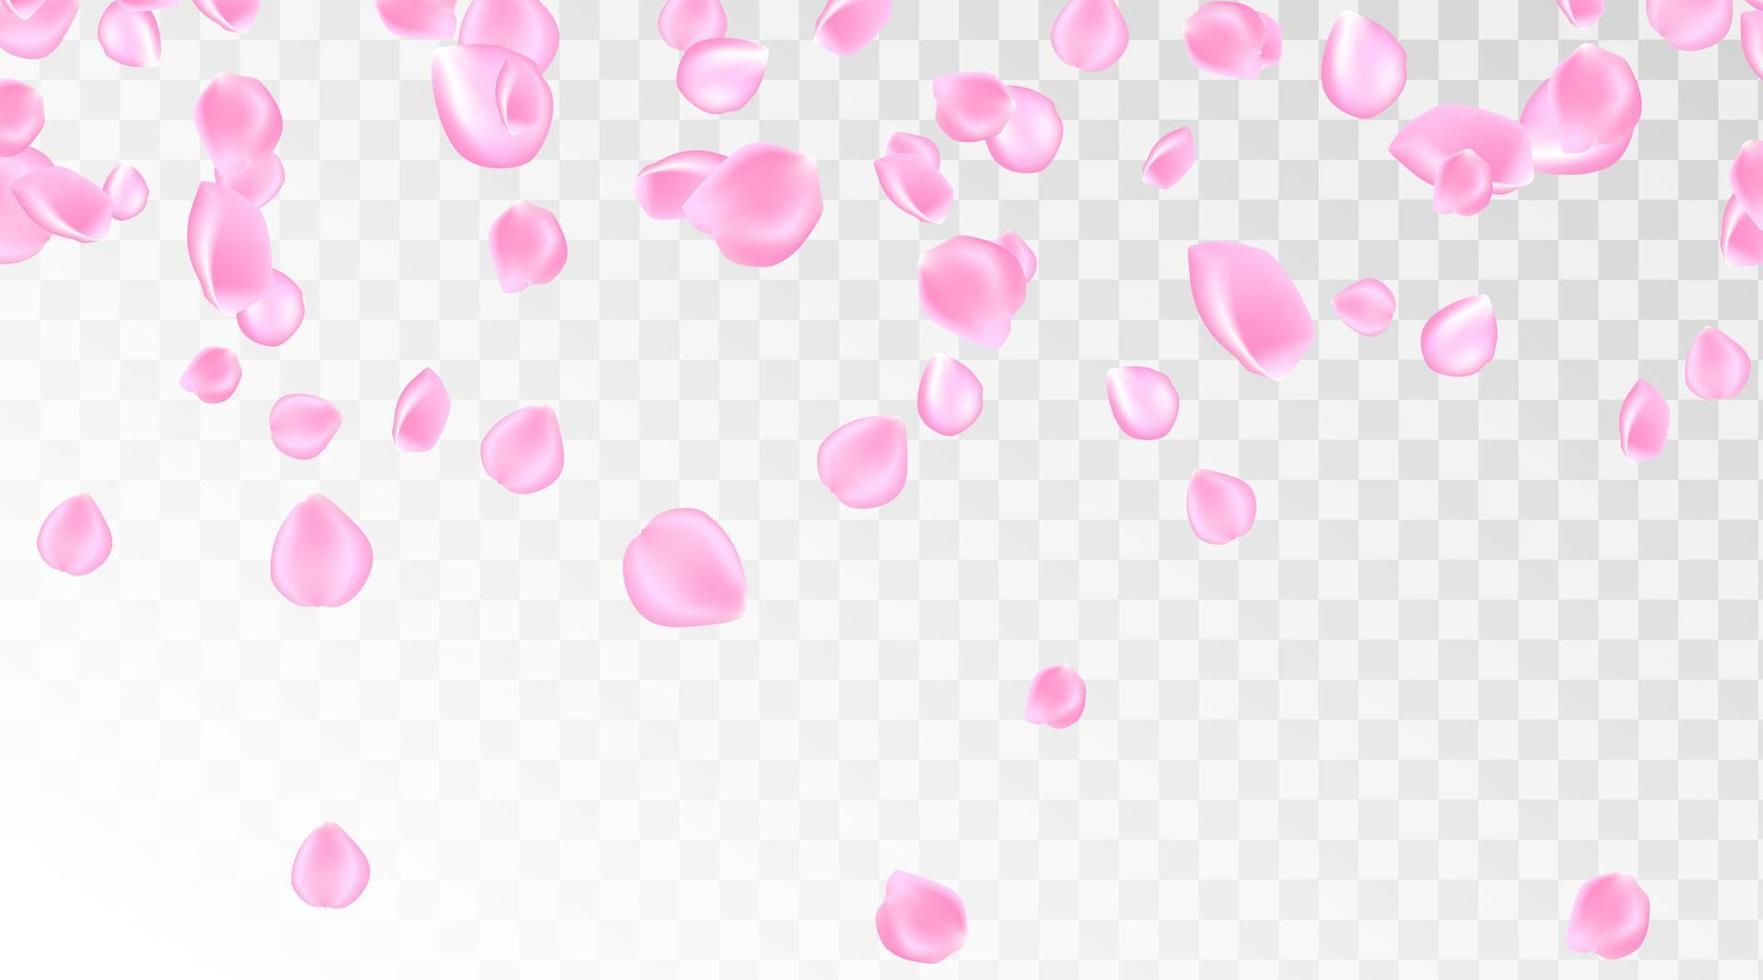 fundo de queda de pétala de rosa rosa. confete com pétalas. vetor eps 10.